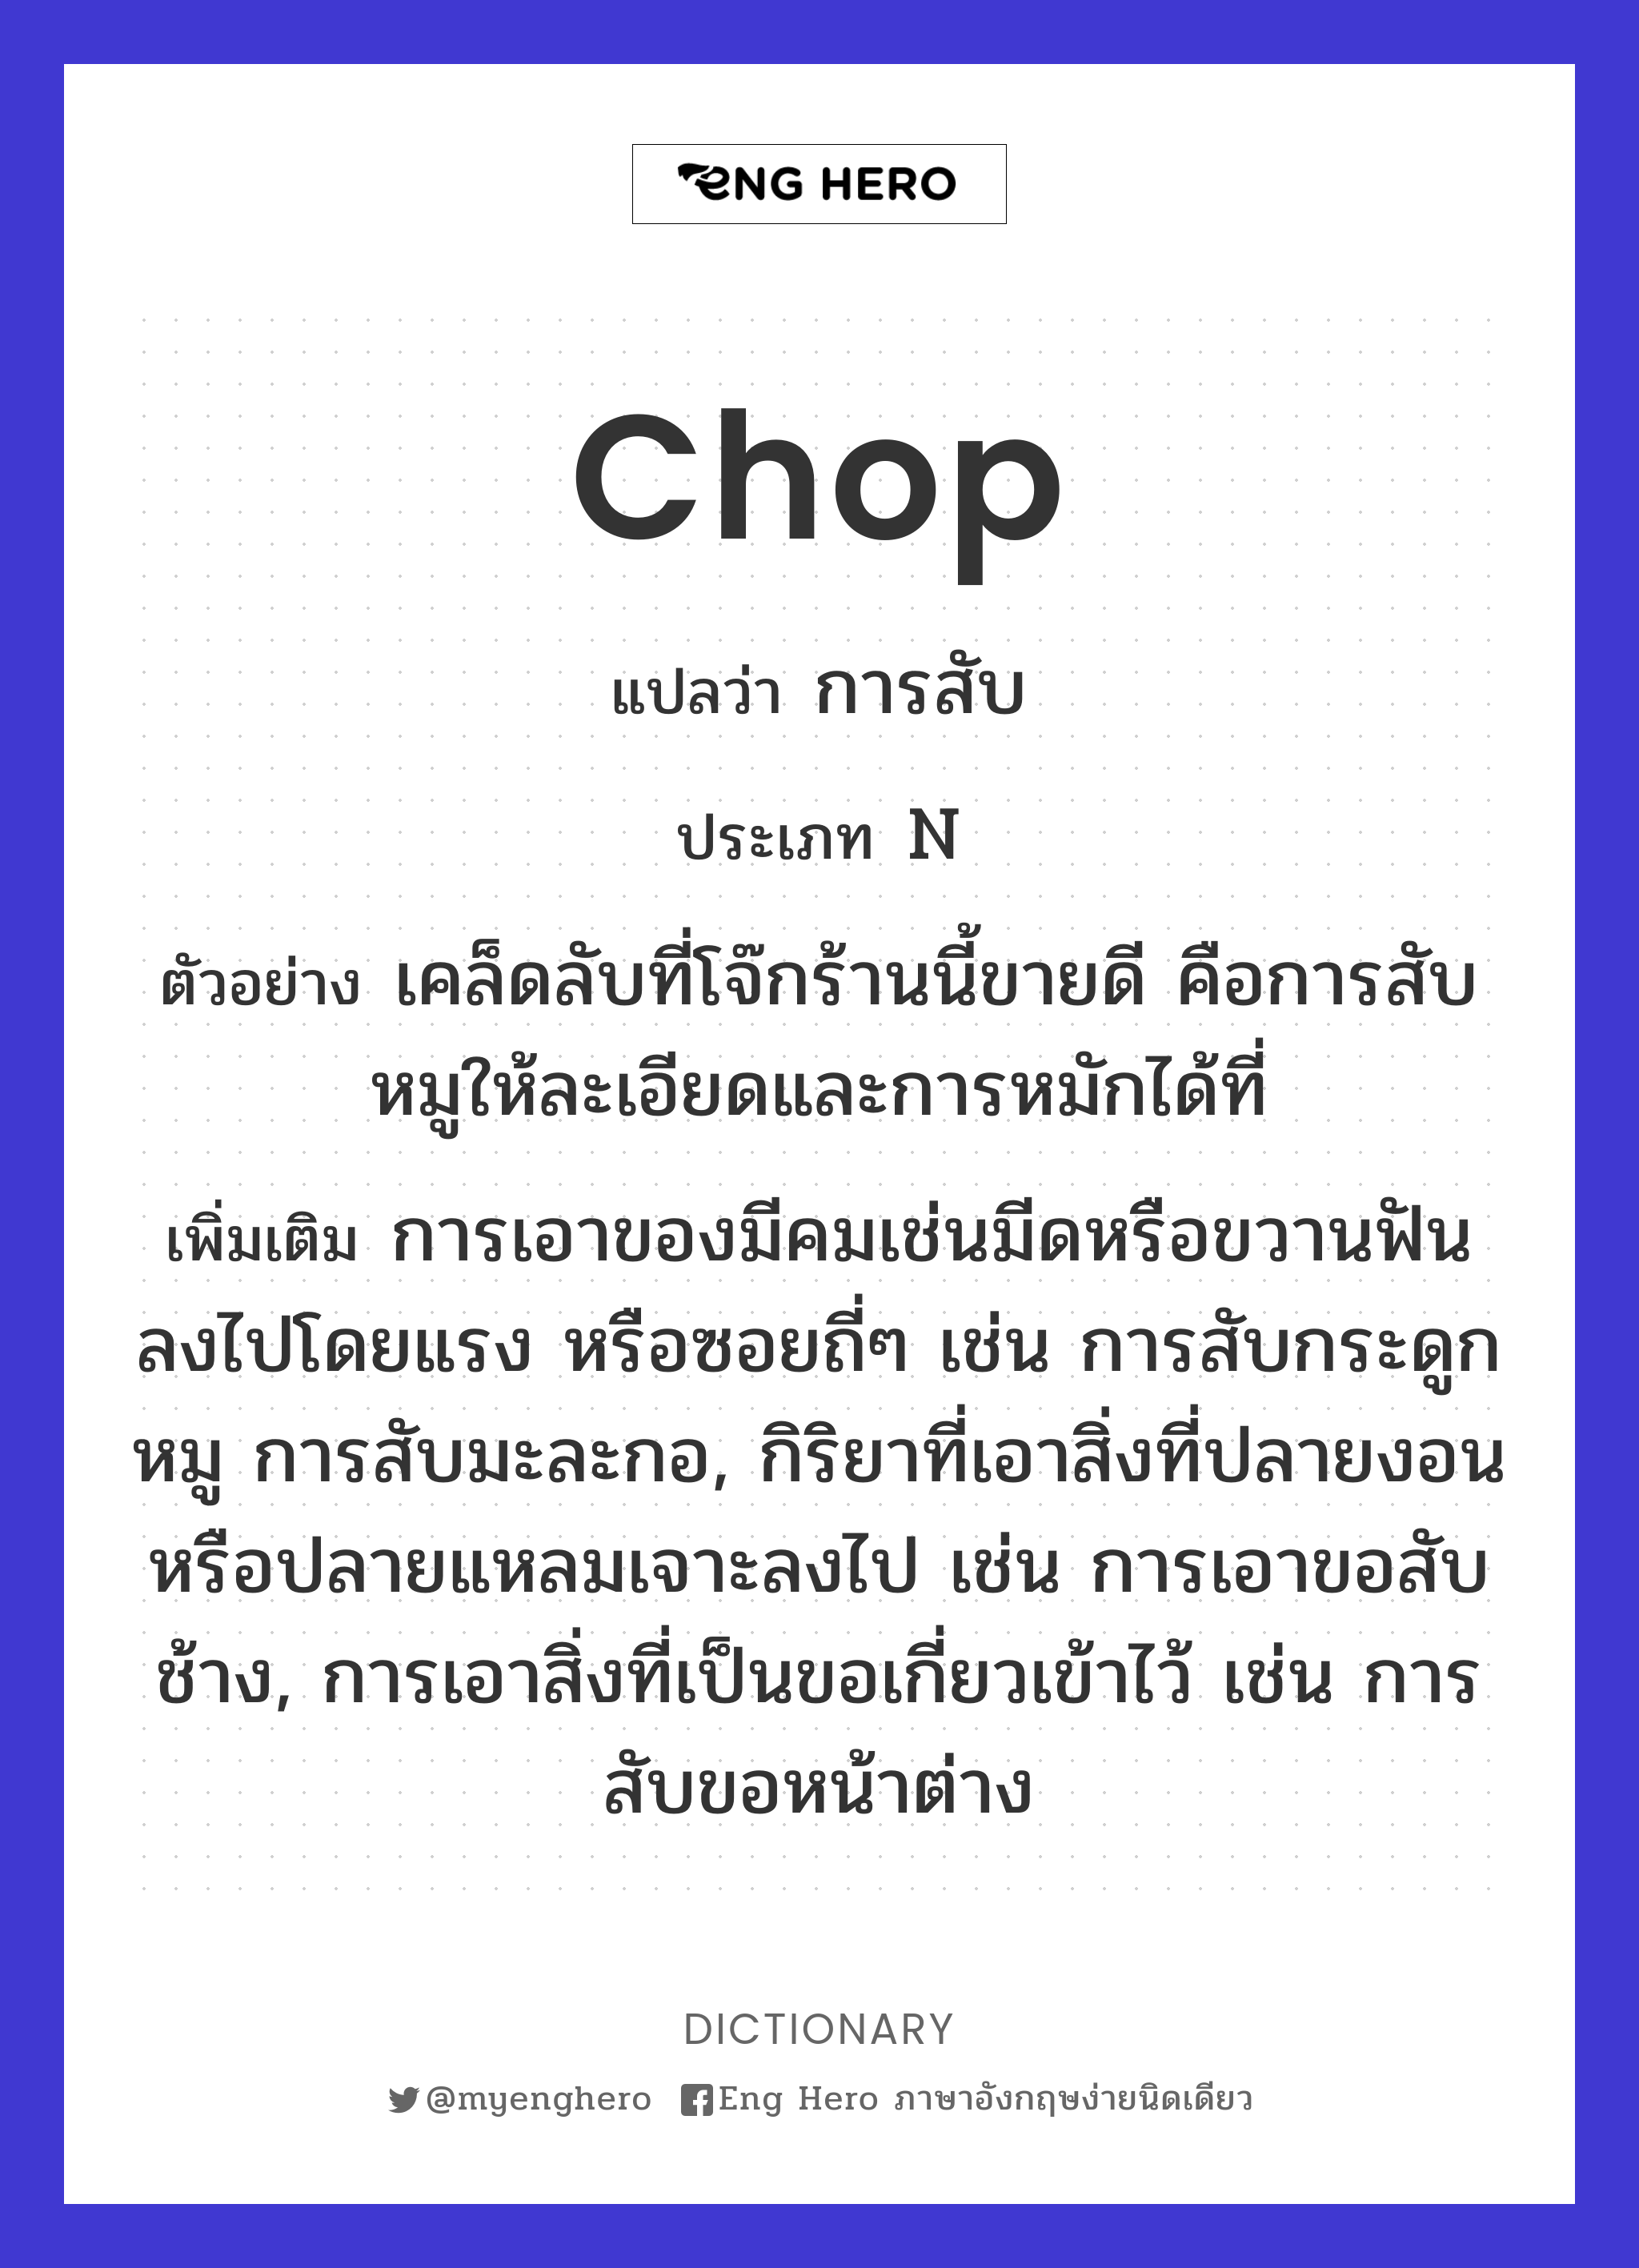 chop